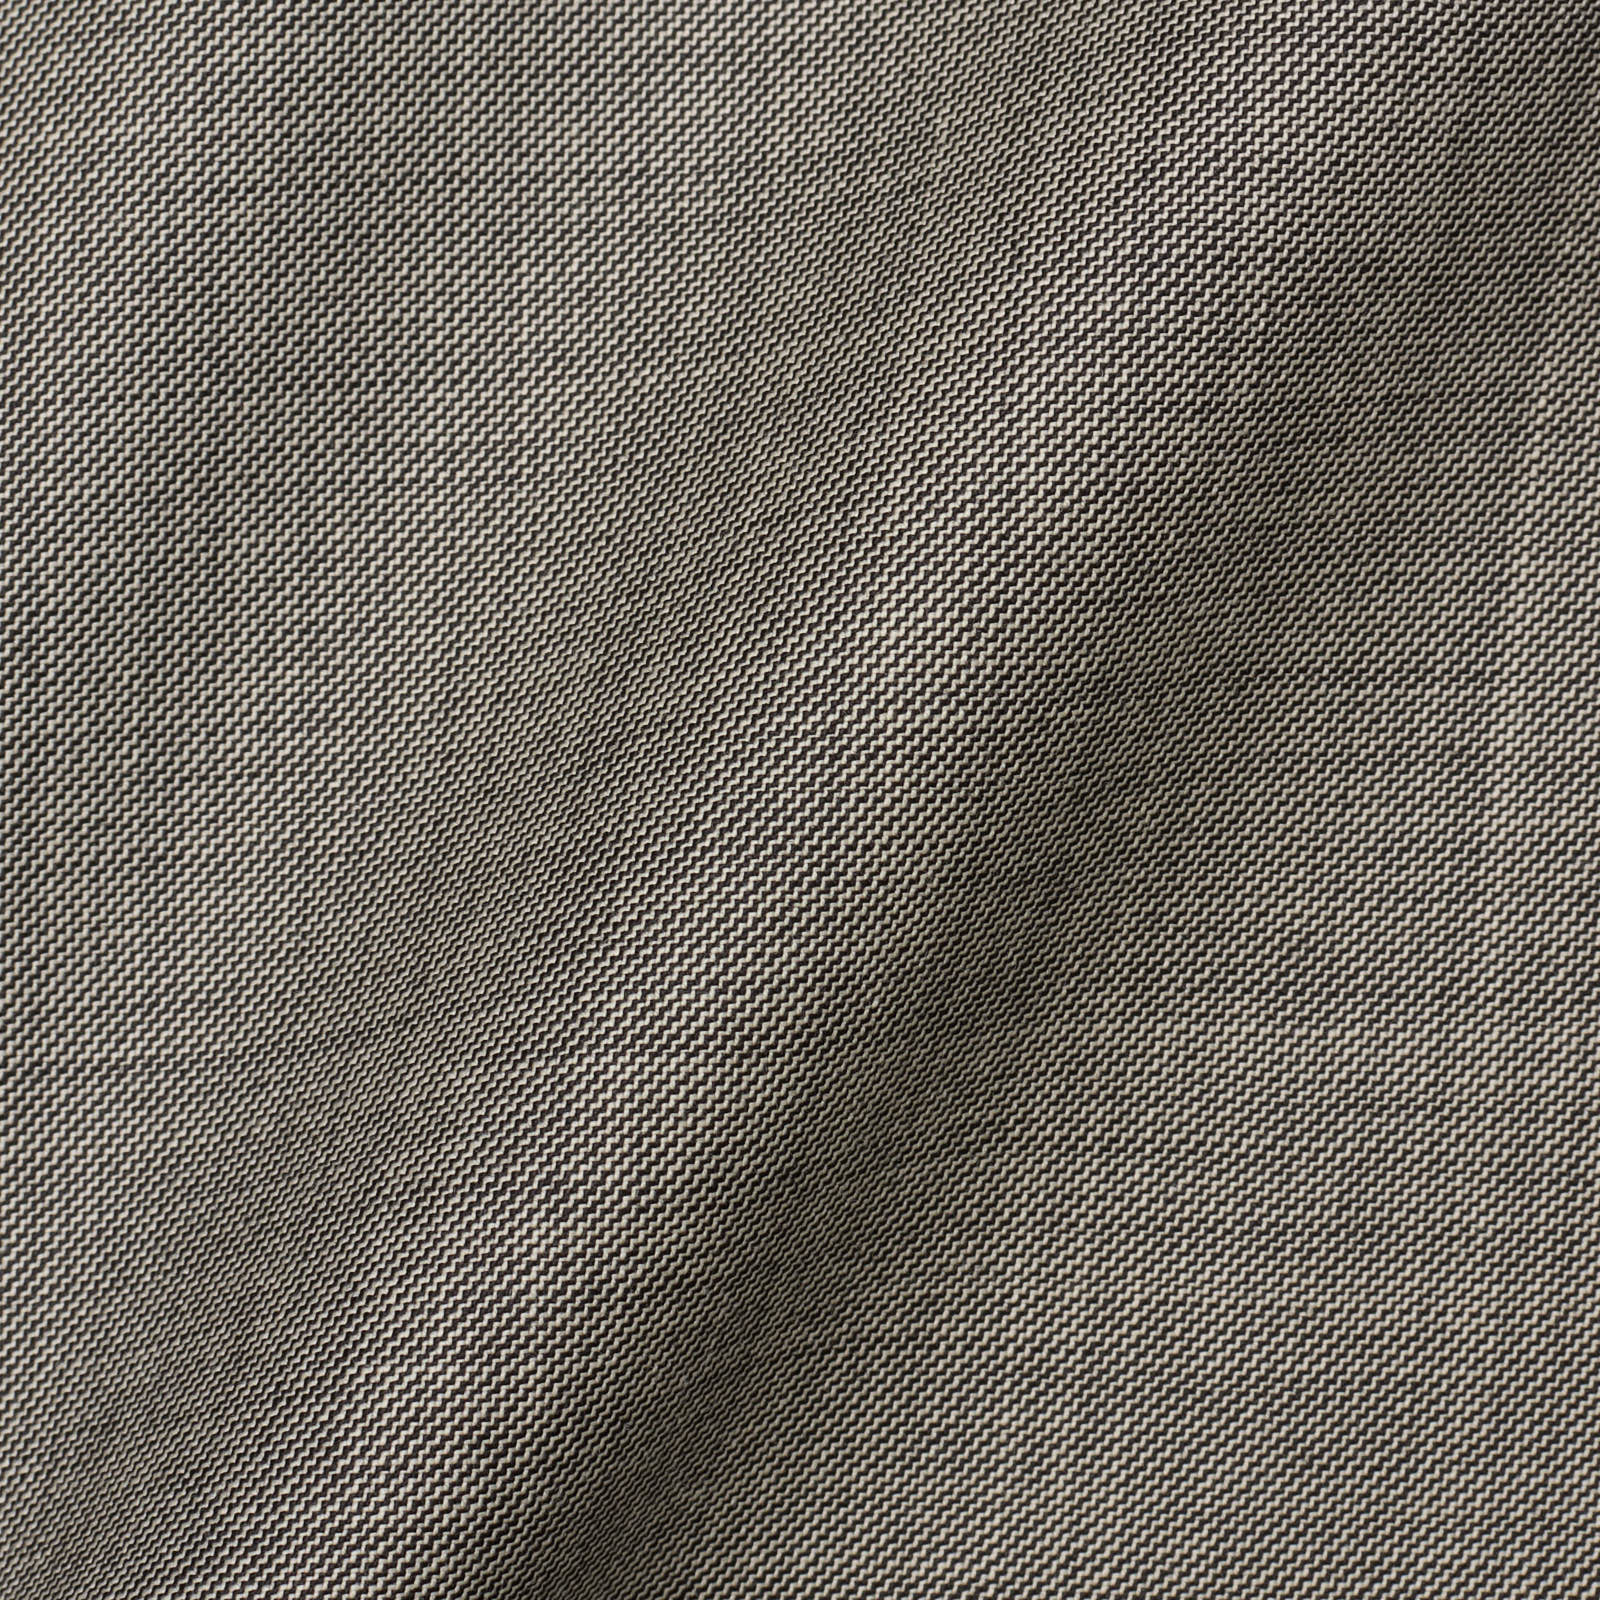 SARTORIA PARTENOPEA for VANNUCCI Gray Handmade 150's Suit EU 52 US 42